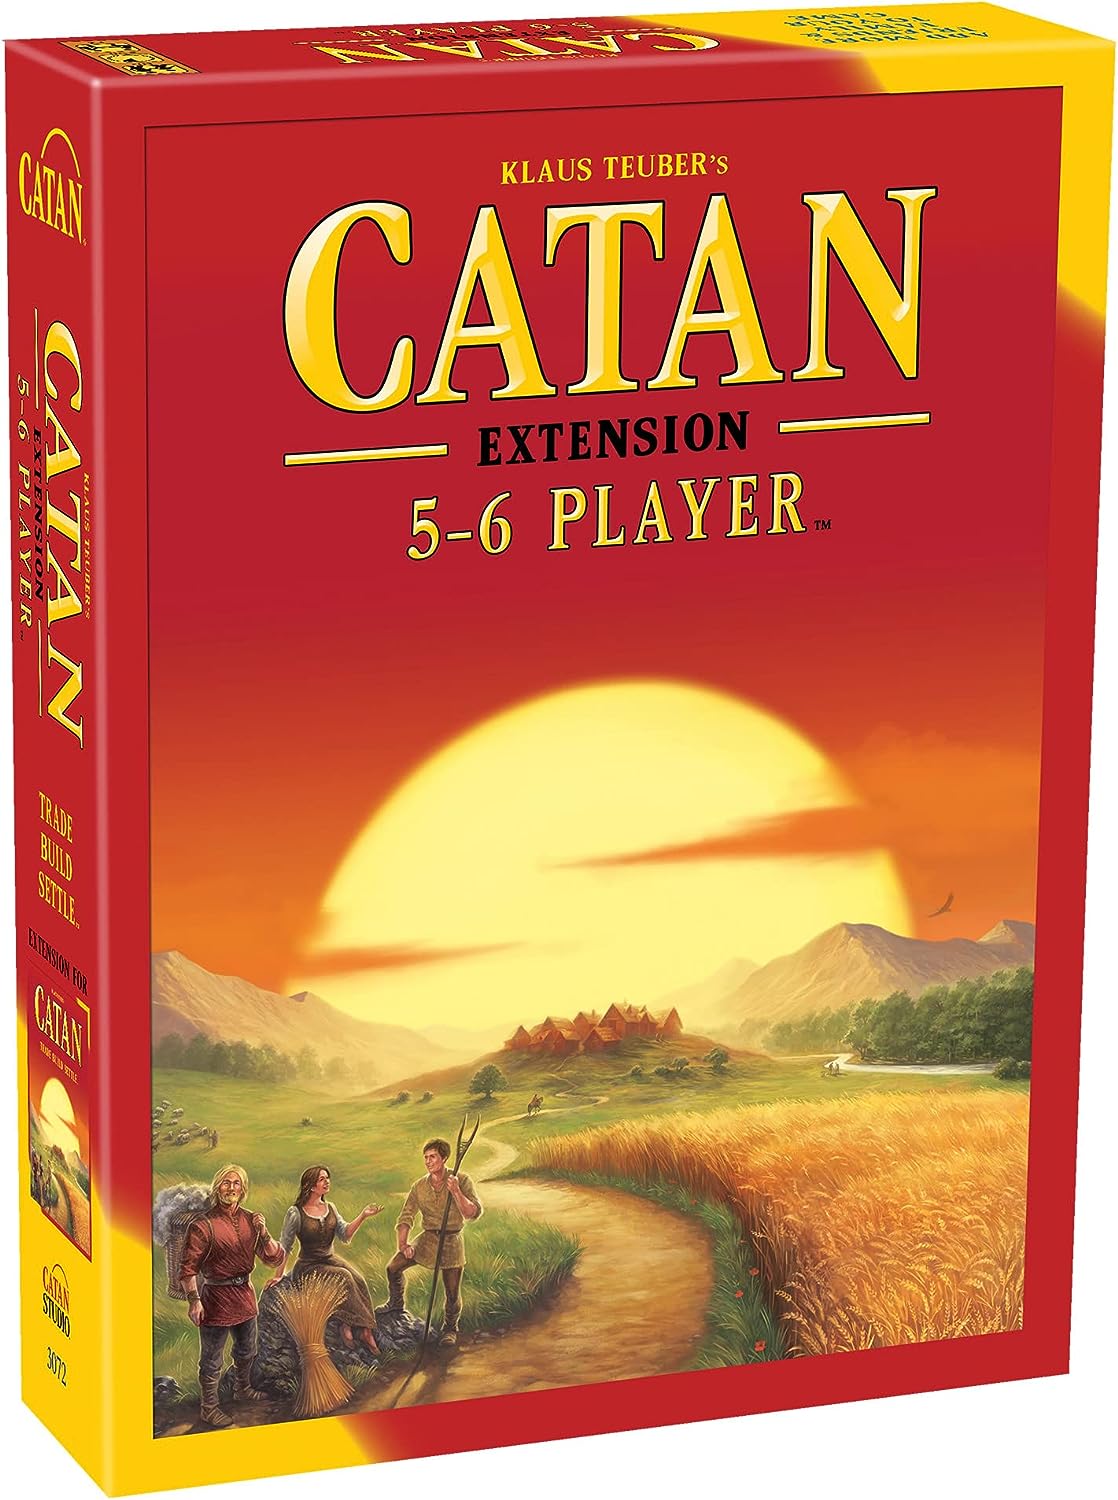 Kids Mandi Catan board game 5-6 player extension.